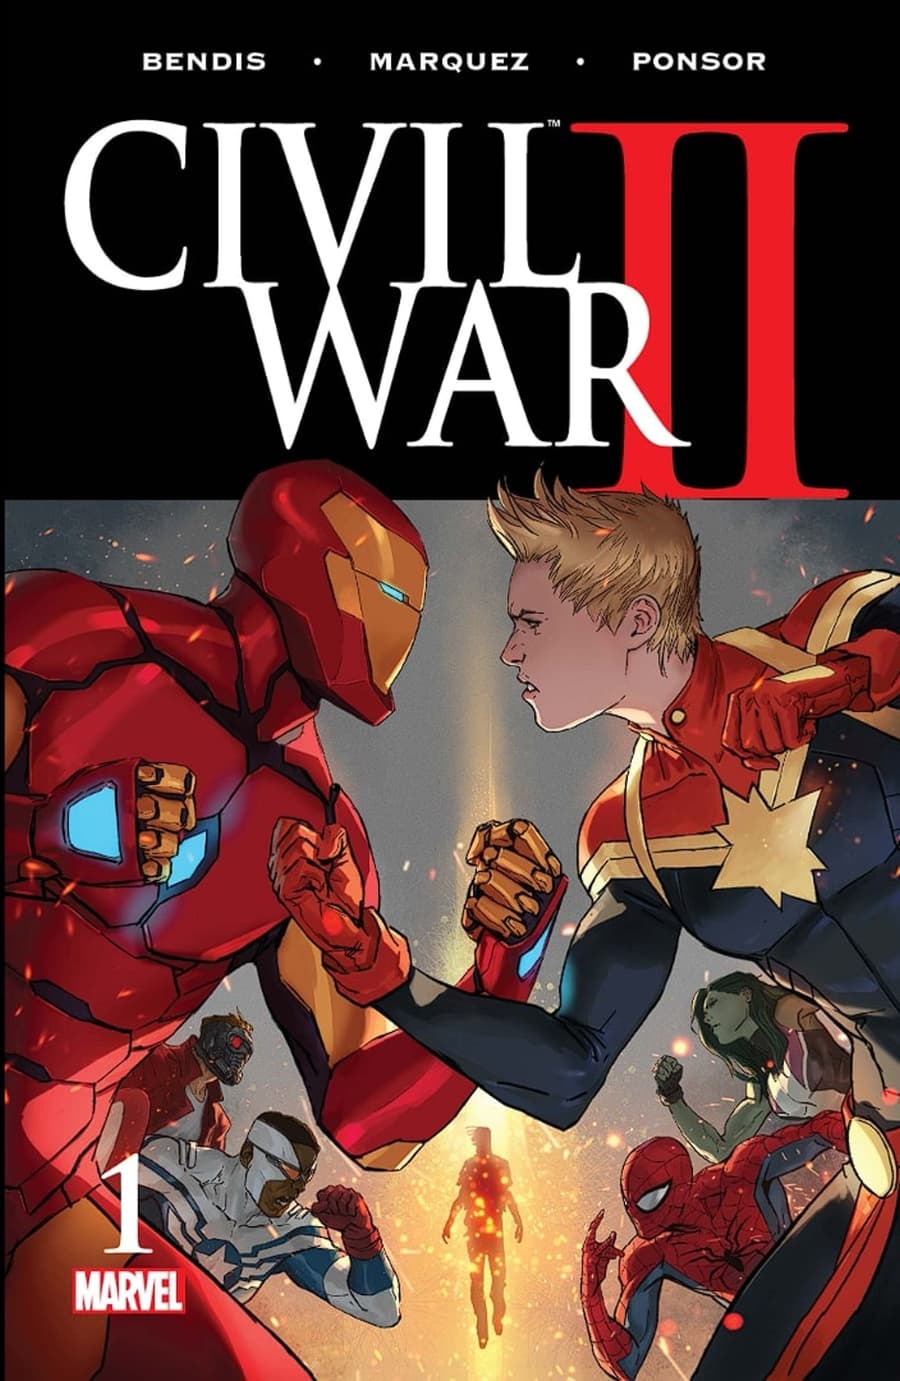 CIVIL WAR II (2016) #1 cover by Marko Djurdjevic